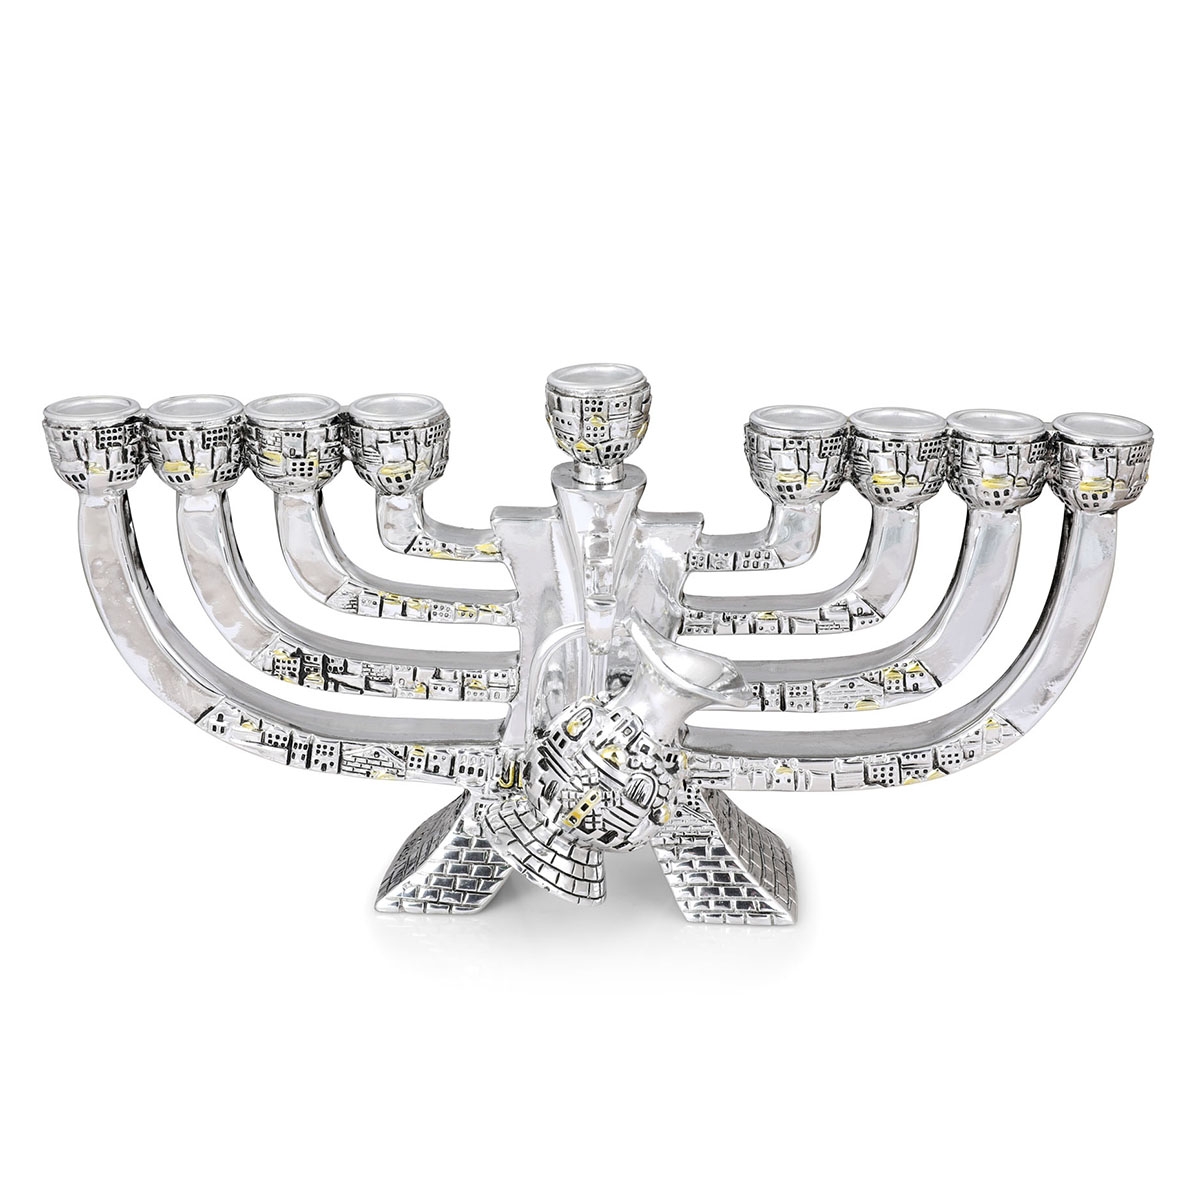 Jerusalem Scenery Silver-Plated Hanukkah Menorah with Pouring Jug - 1